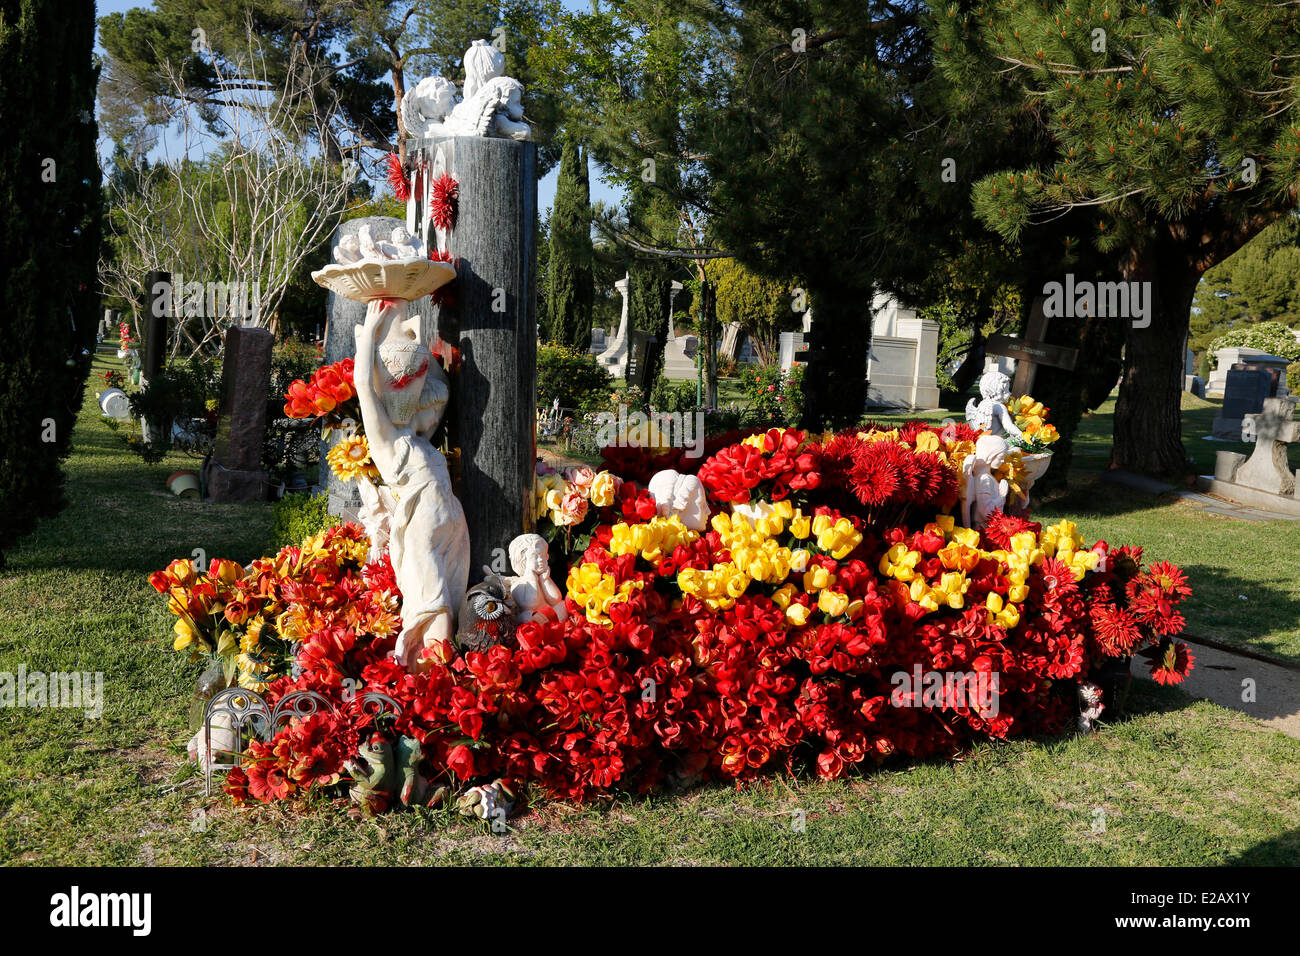 United States, California, Los Angeles, Hollywood Forever Cemetery, dos de Paramount Studios, où Johnny Ramone, ara enterré Banque D'Images